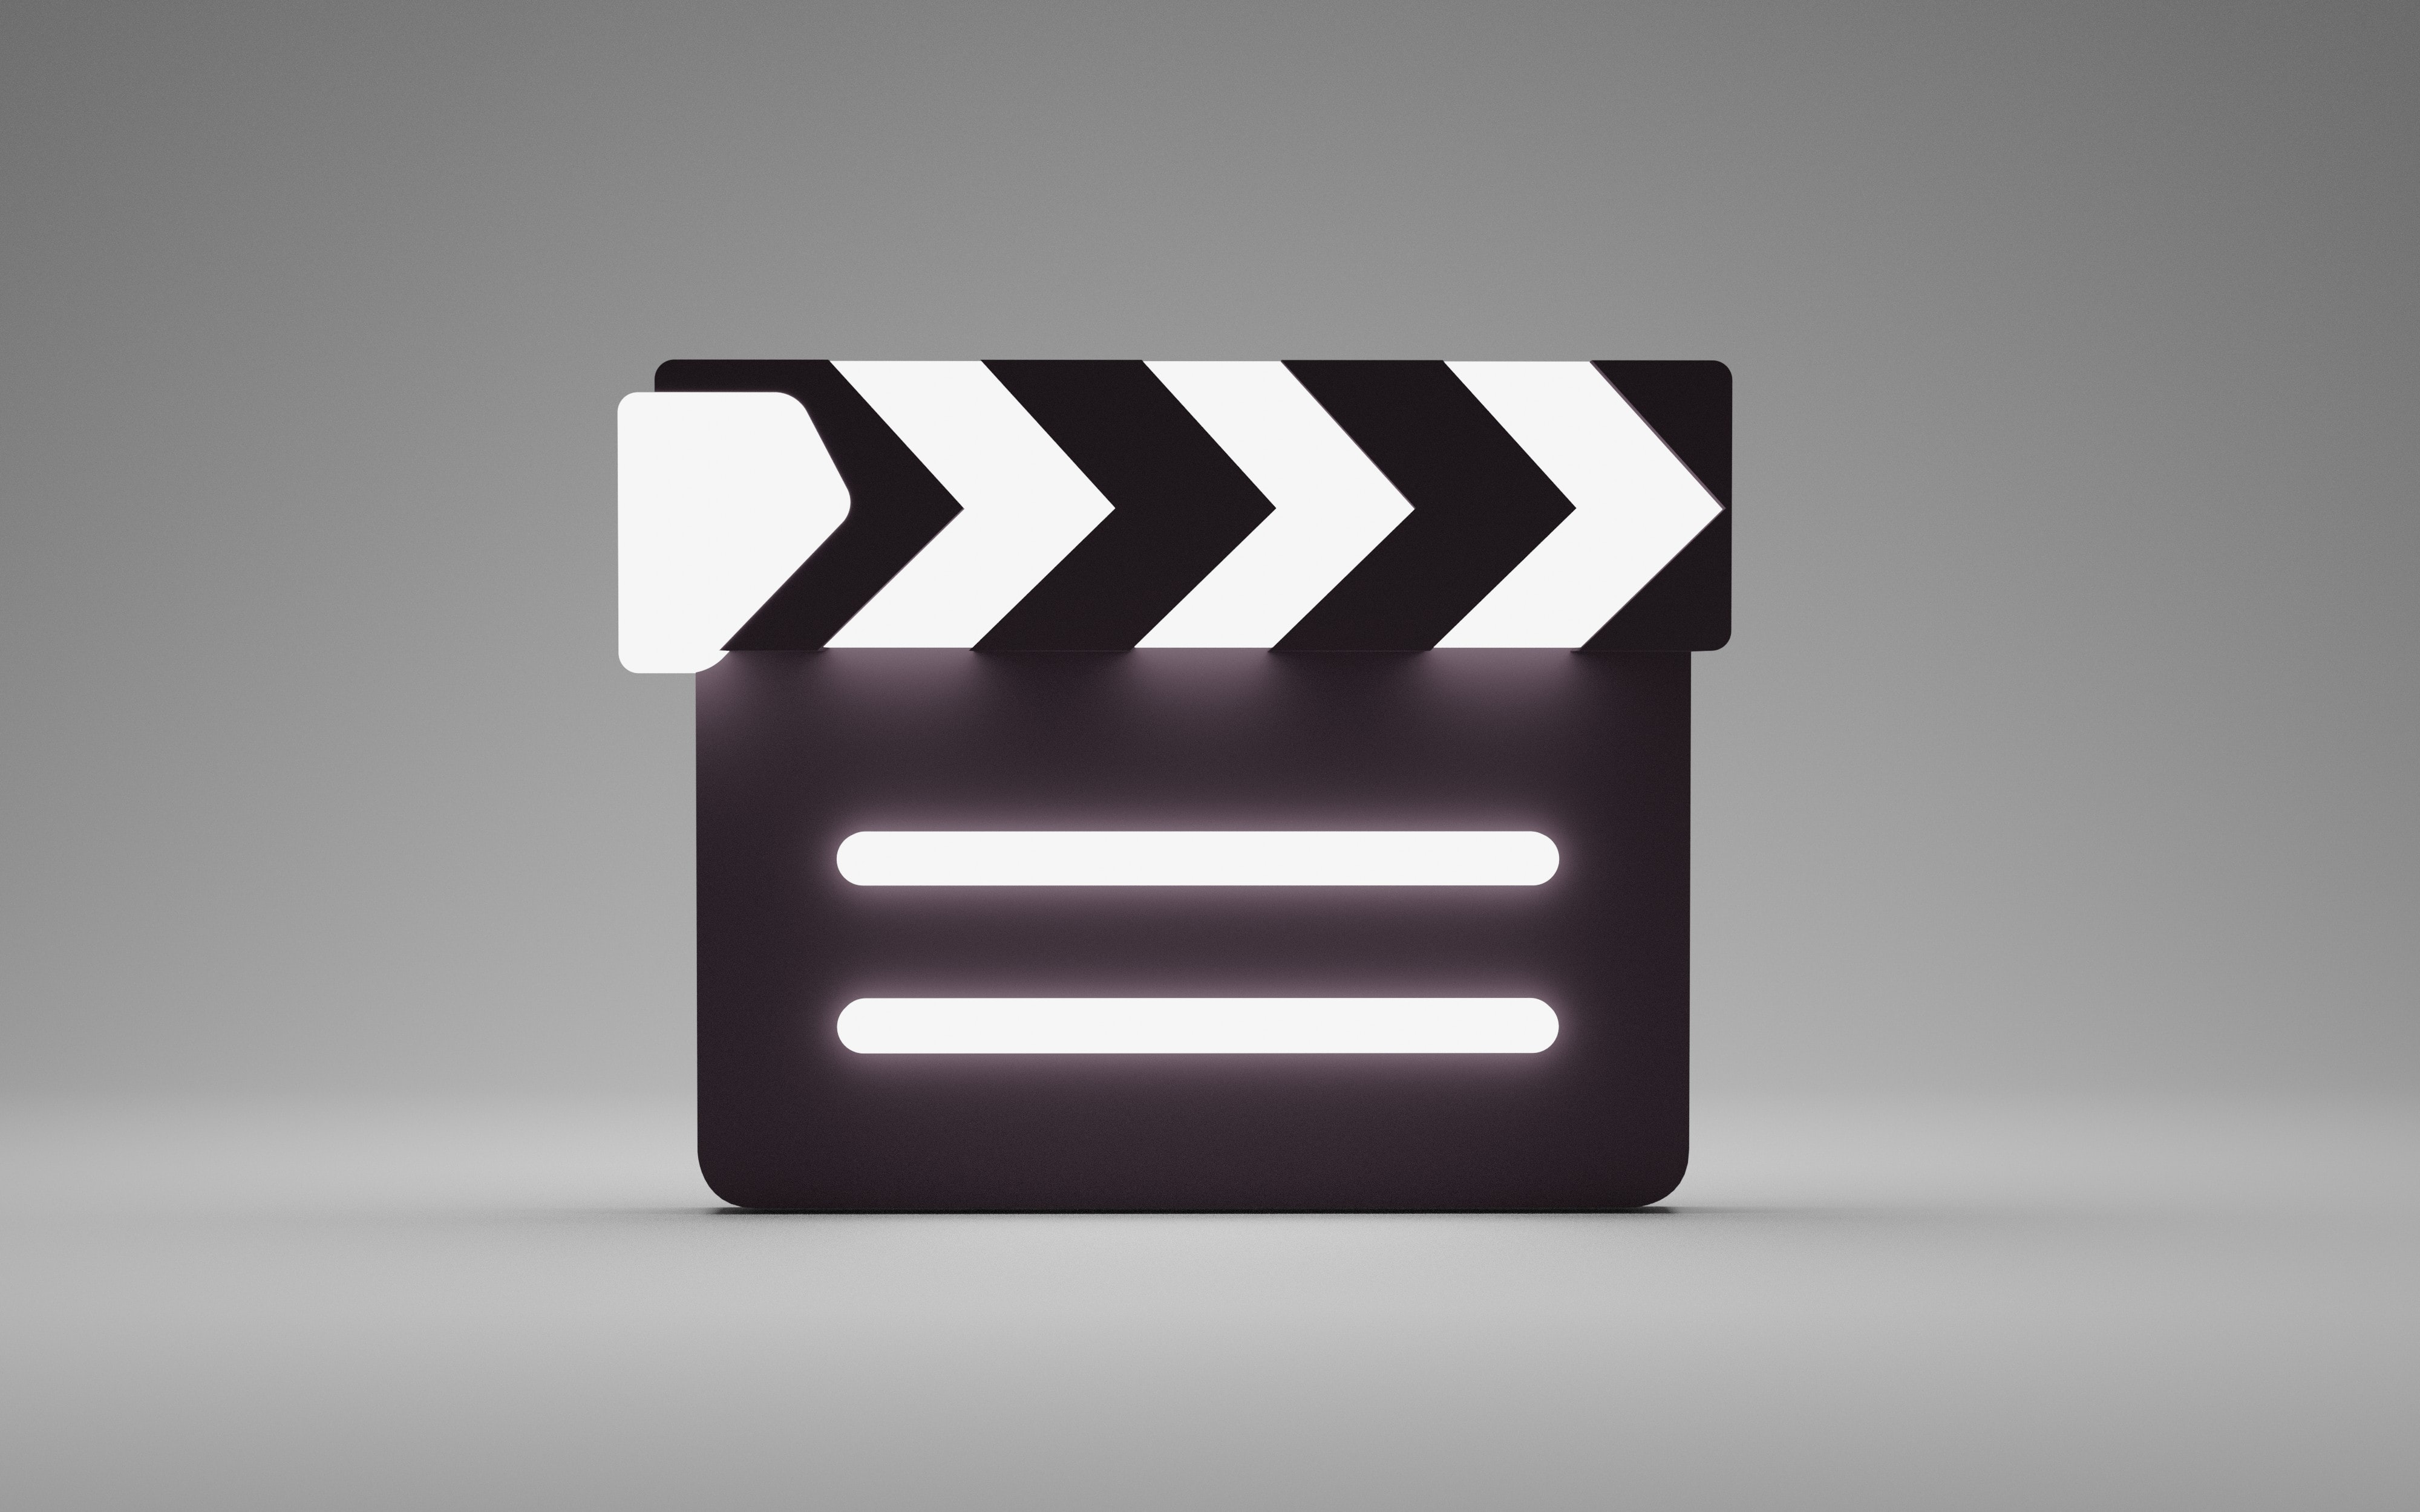 Featured image: Film clapper board - Video Set to Become a Cornerstone of the Digital Era